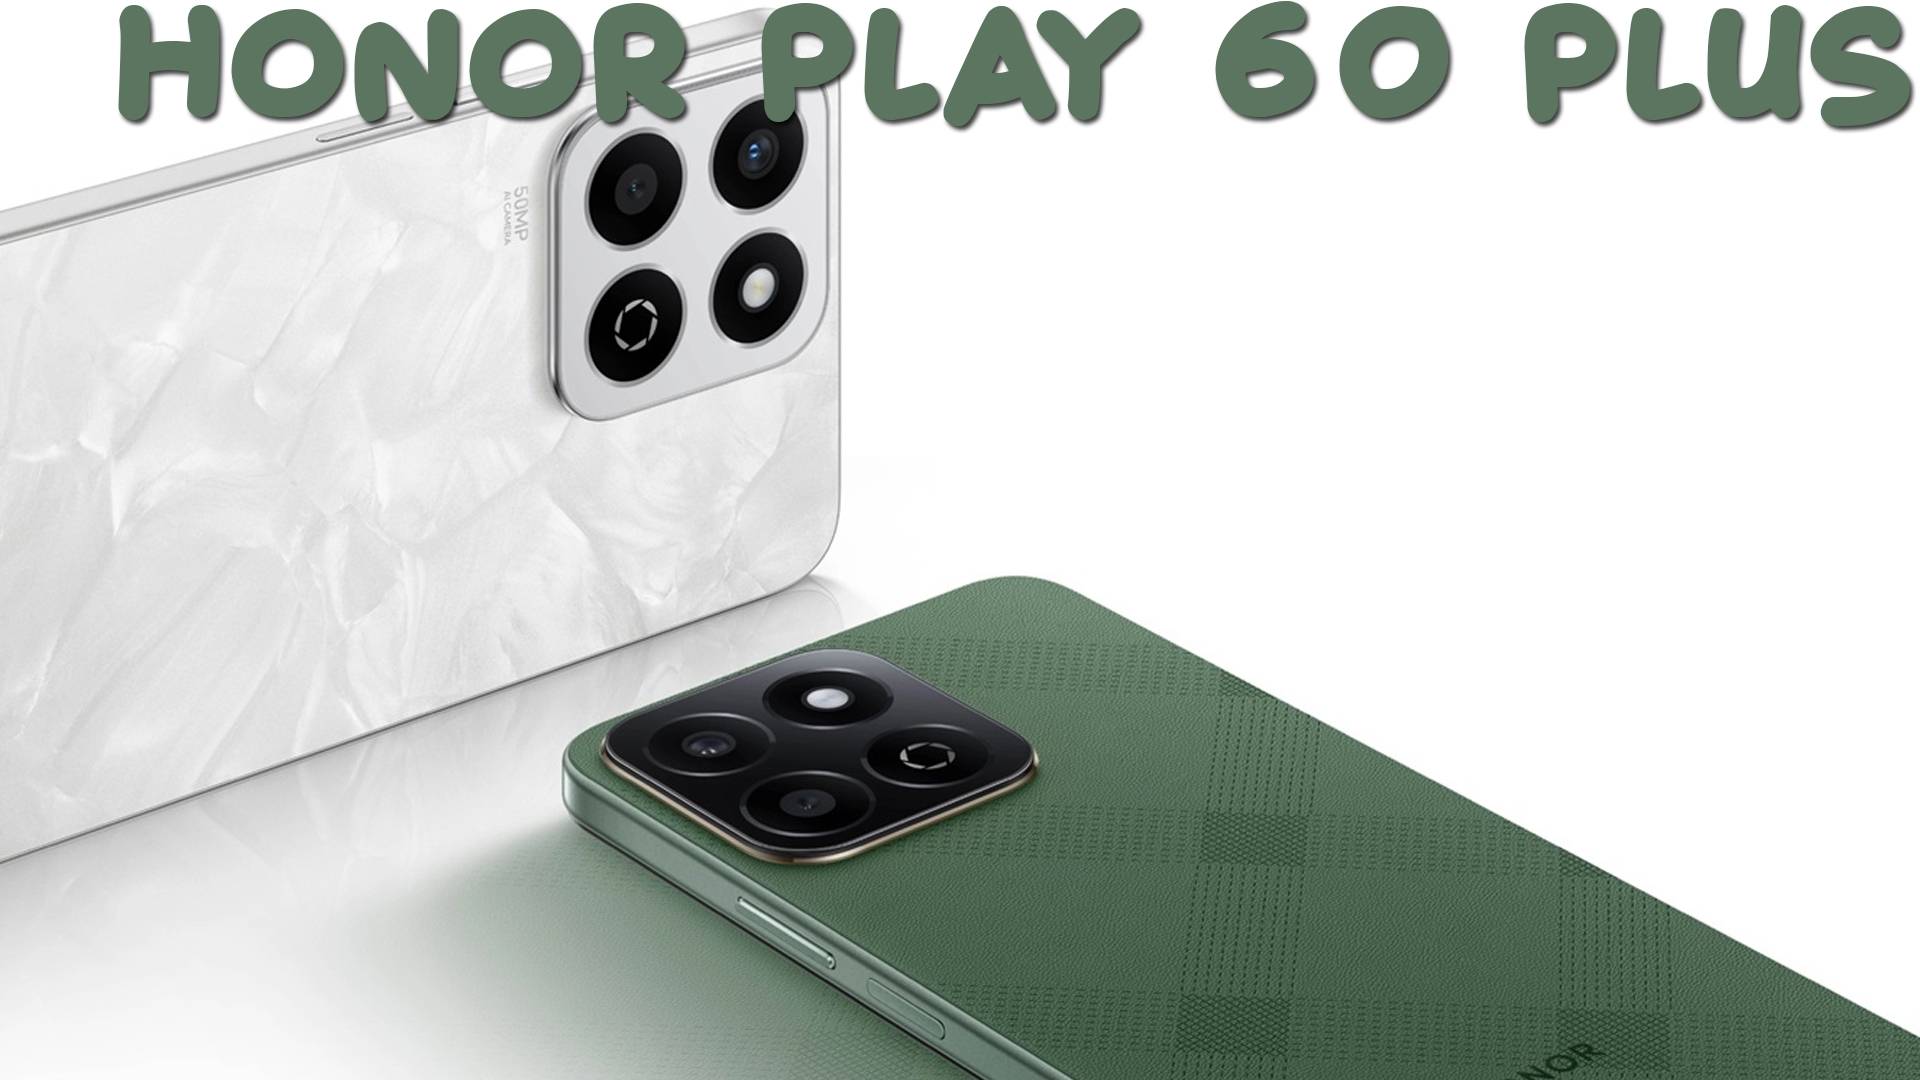 Honor Play 60 Plus первый обзор на русском